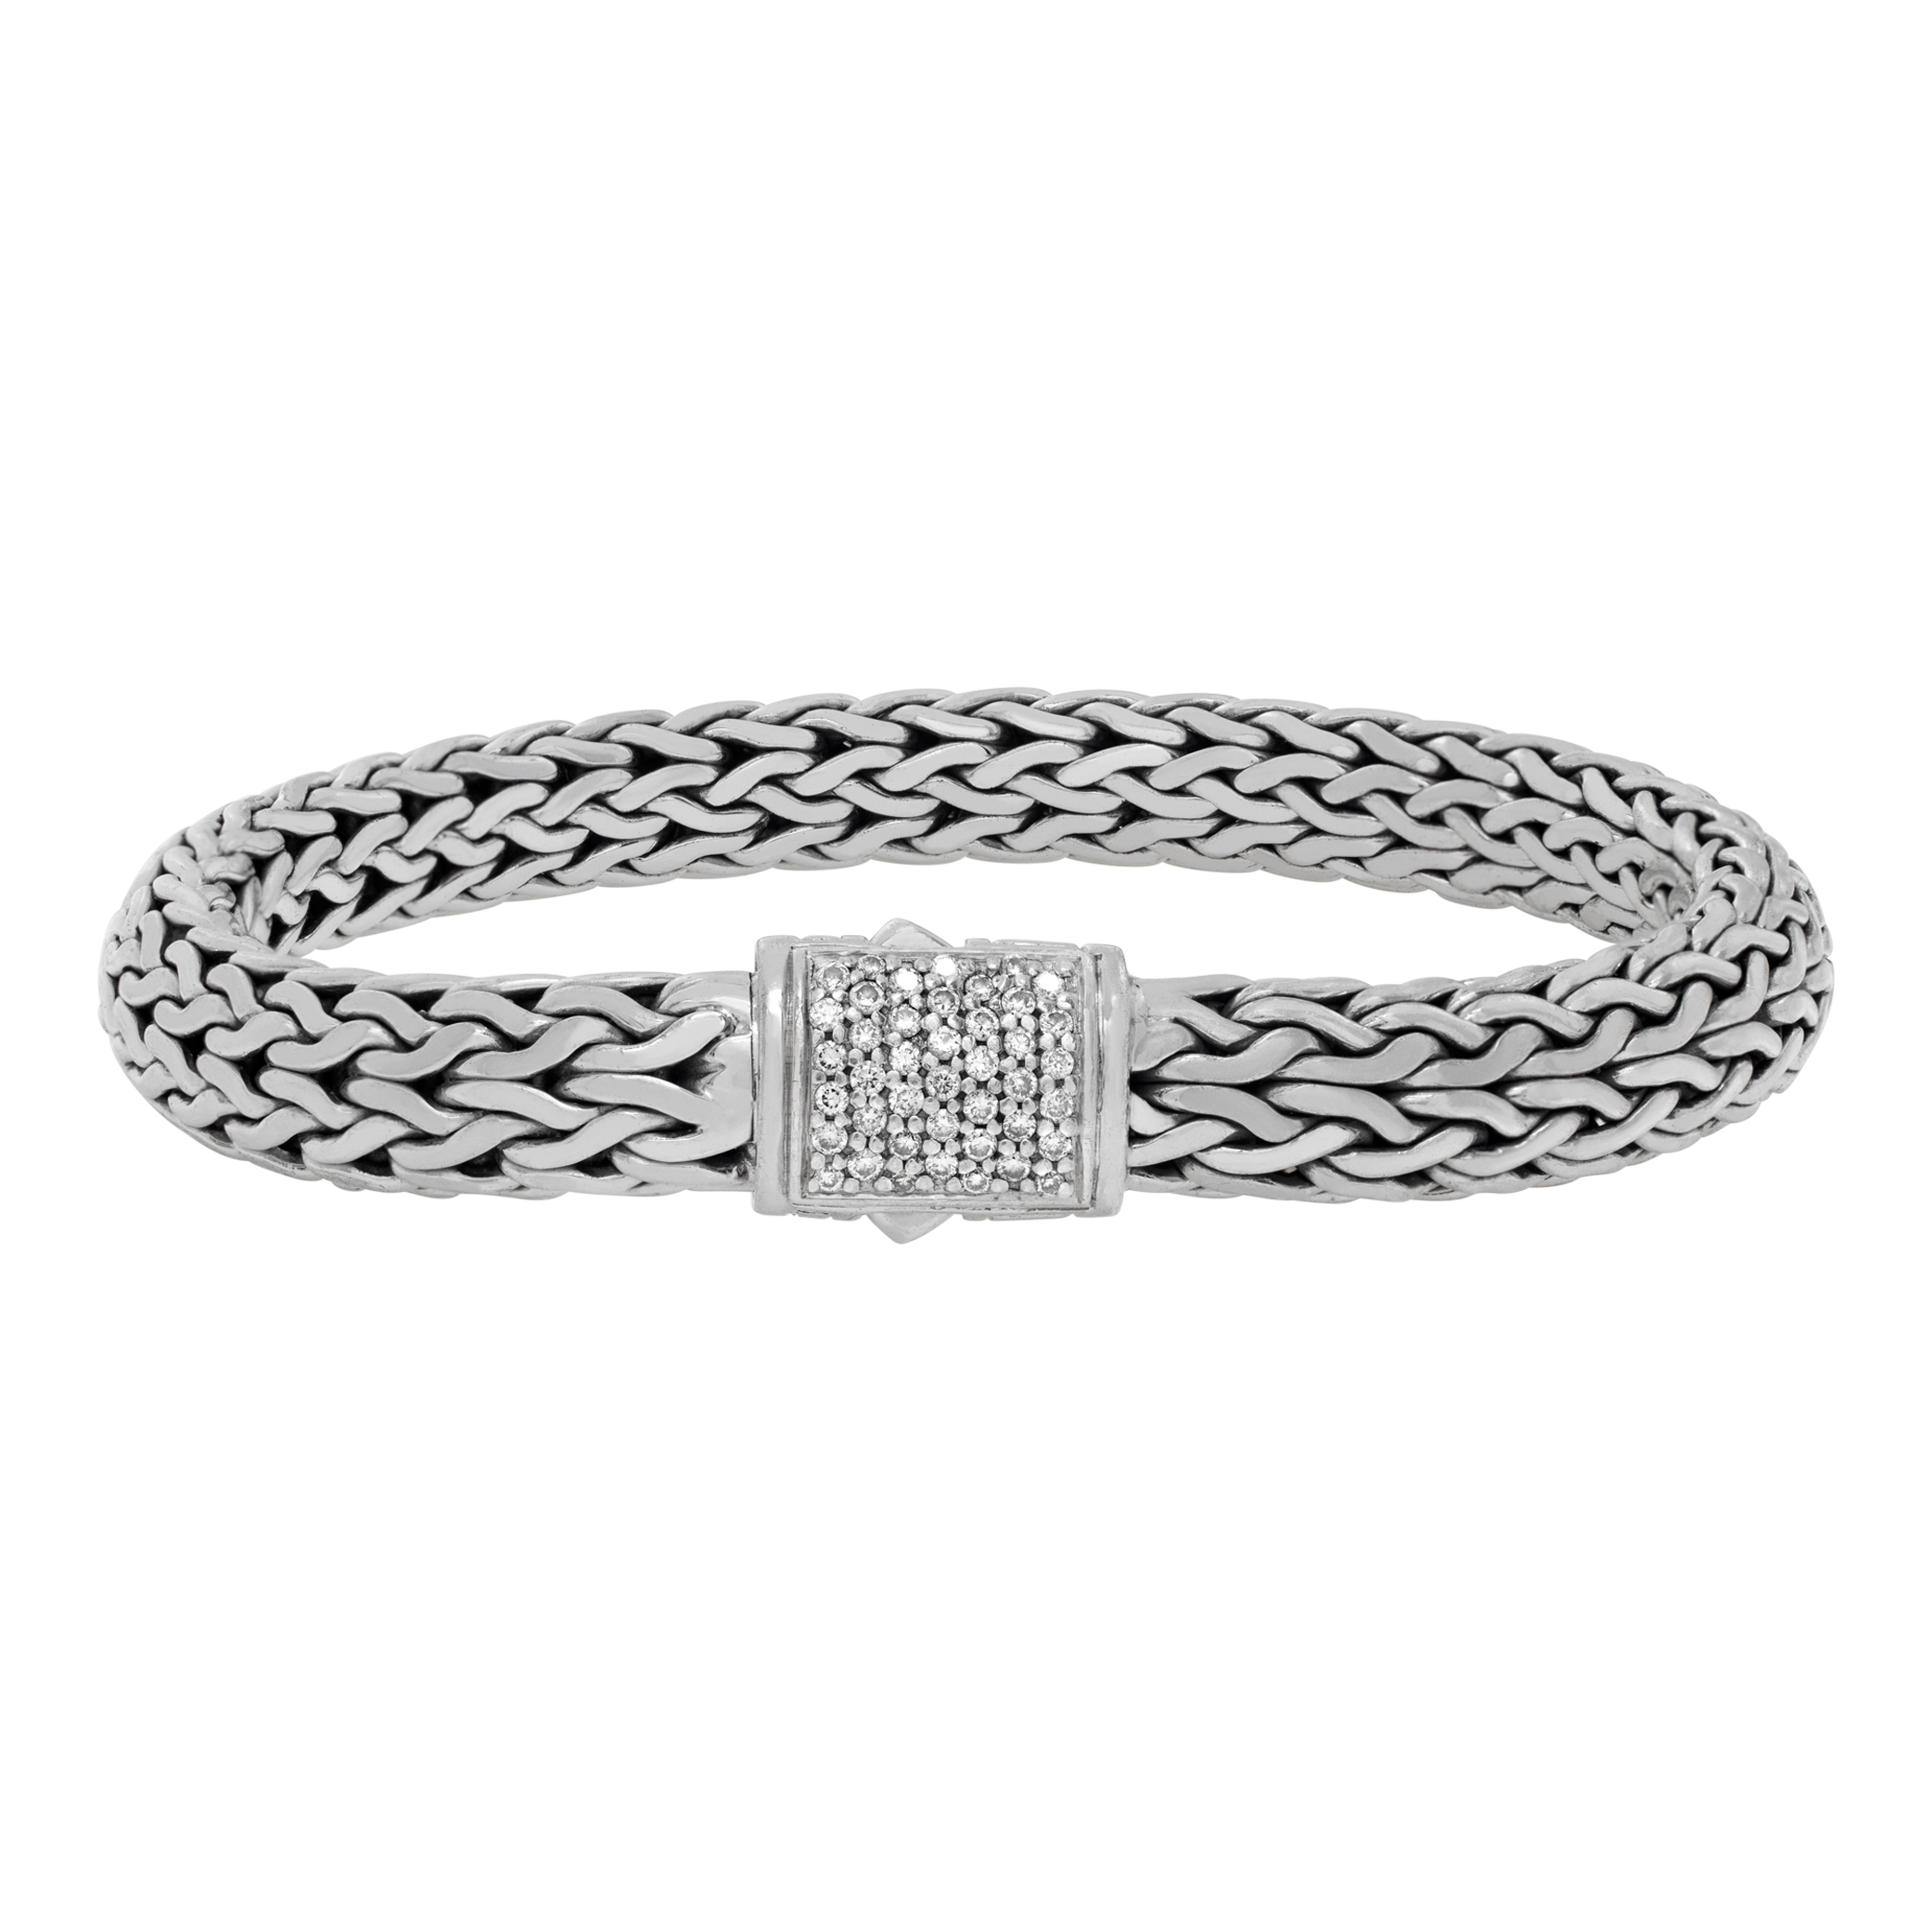 John Hardy Classic Chain diamond pave bracelet in sterling silver